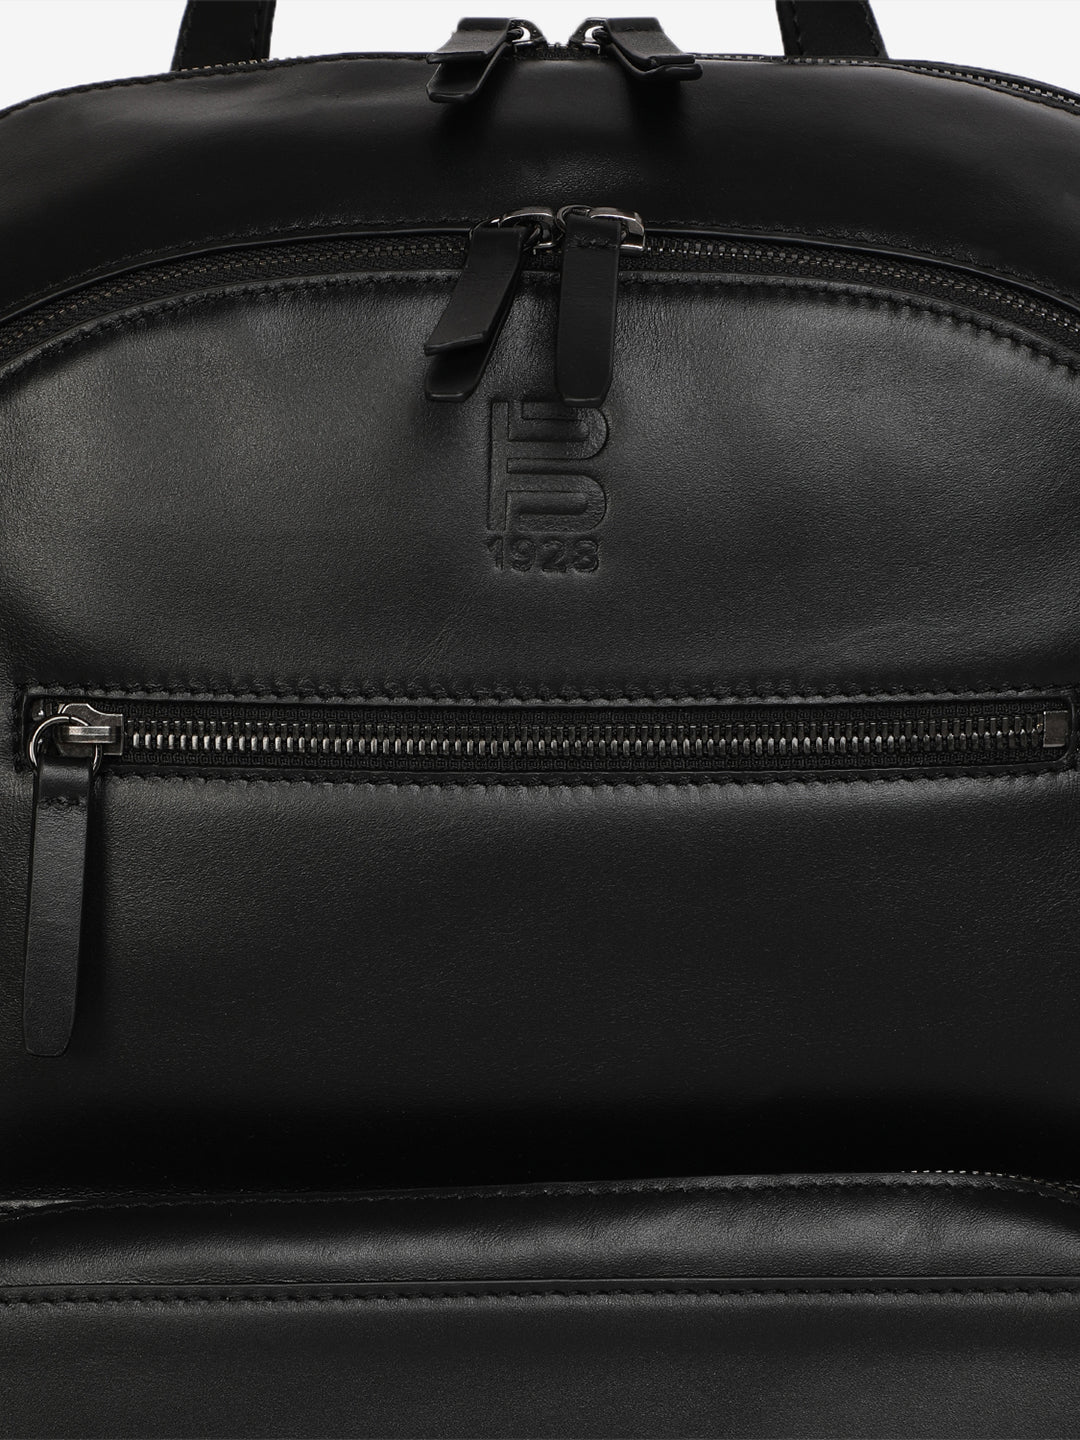 BAGATT Black Leather Backpack